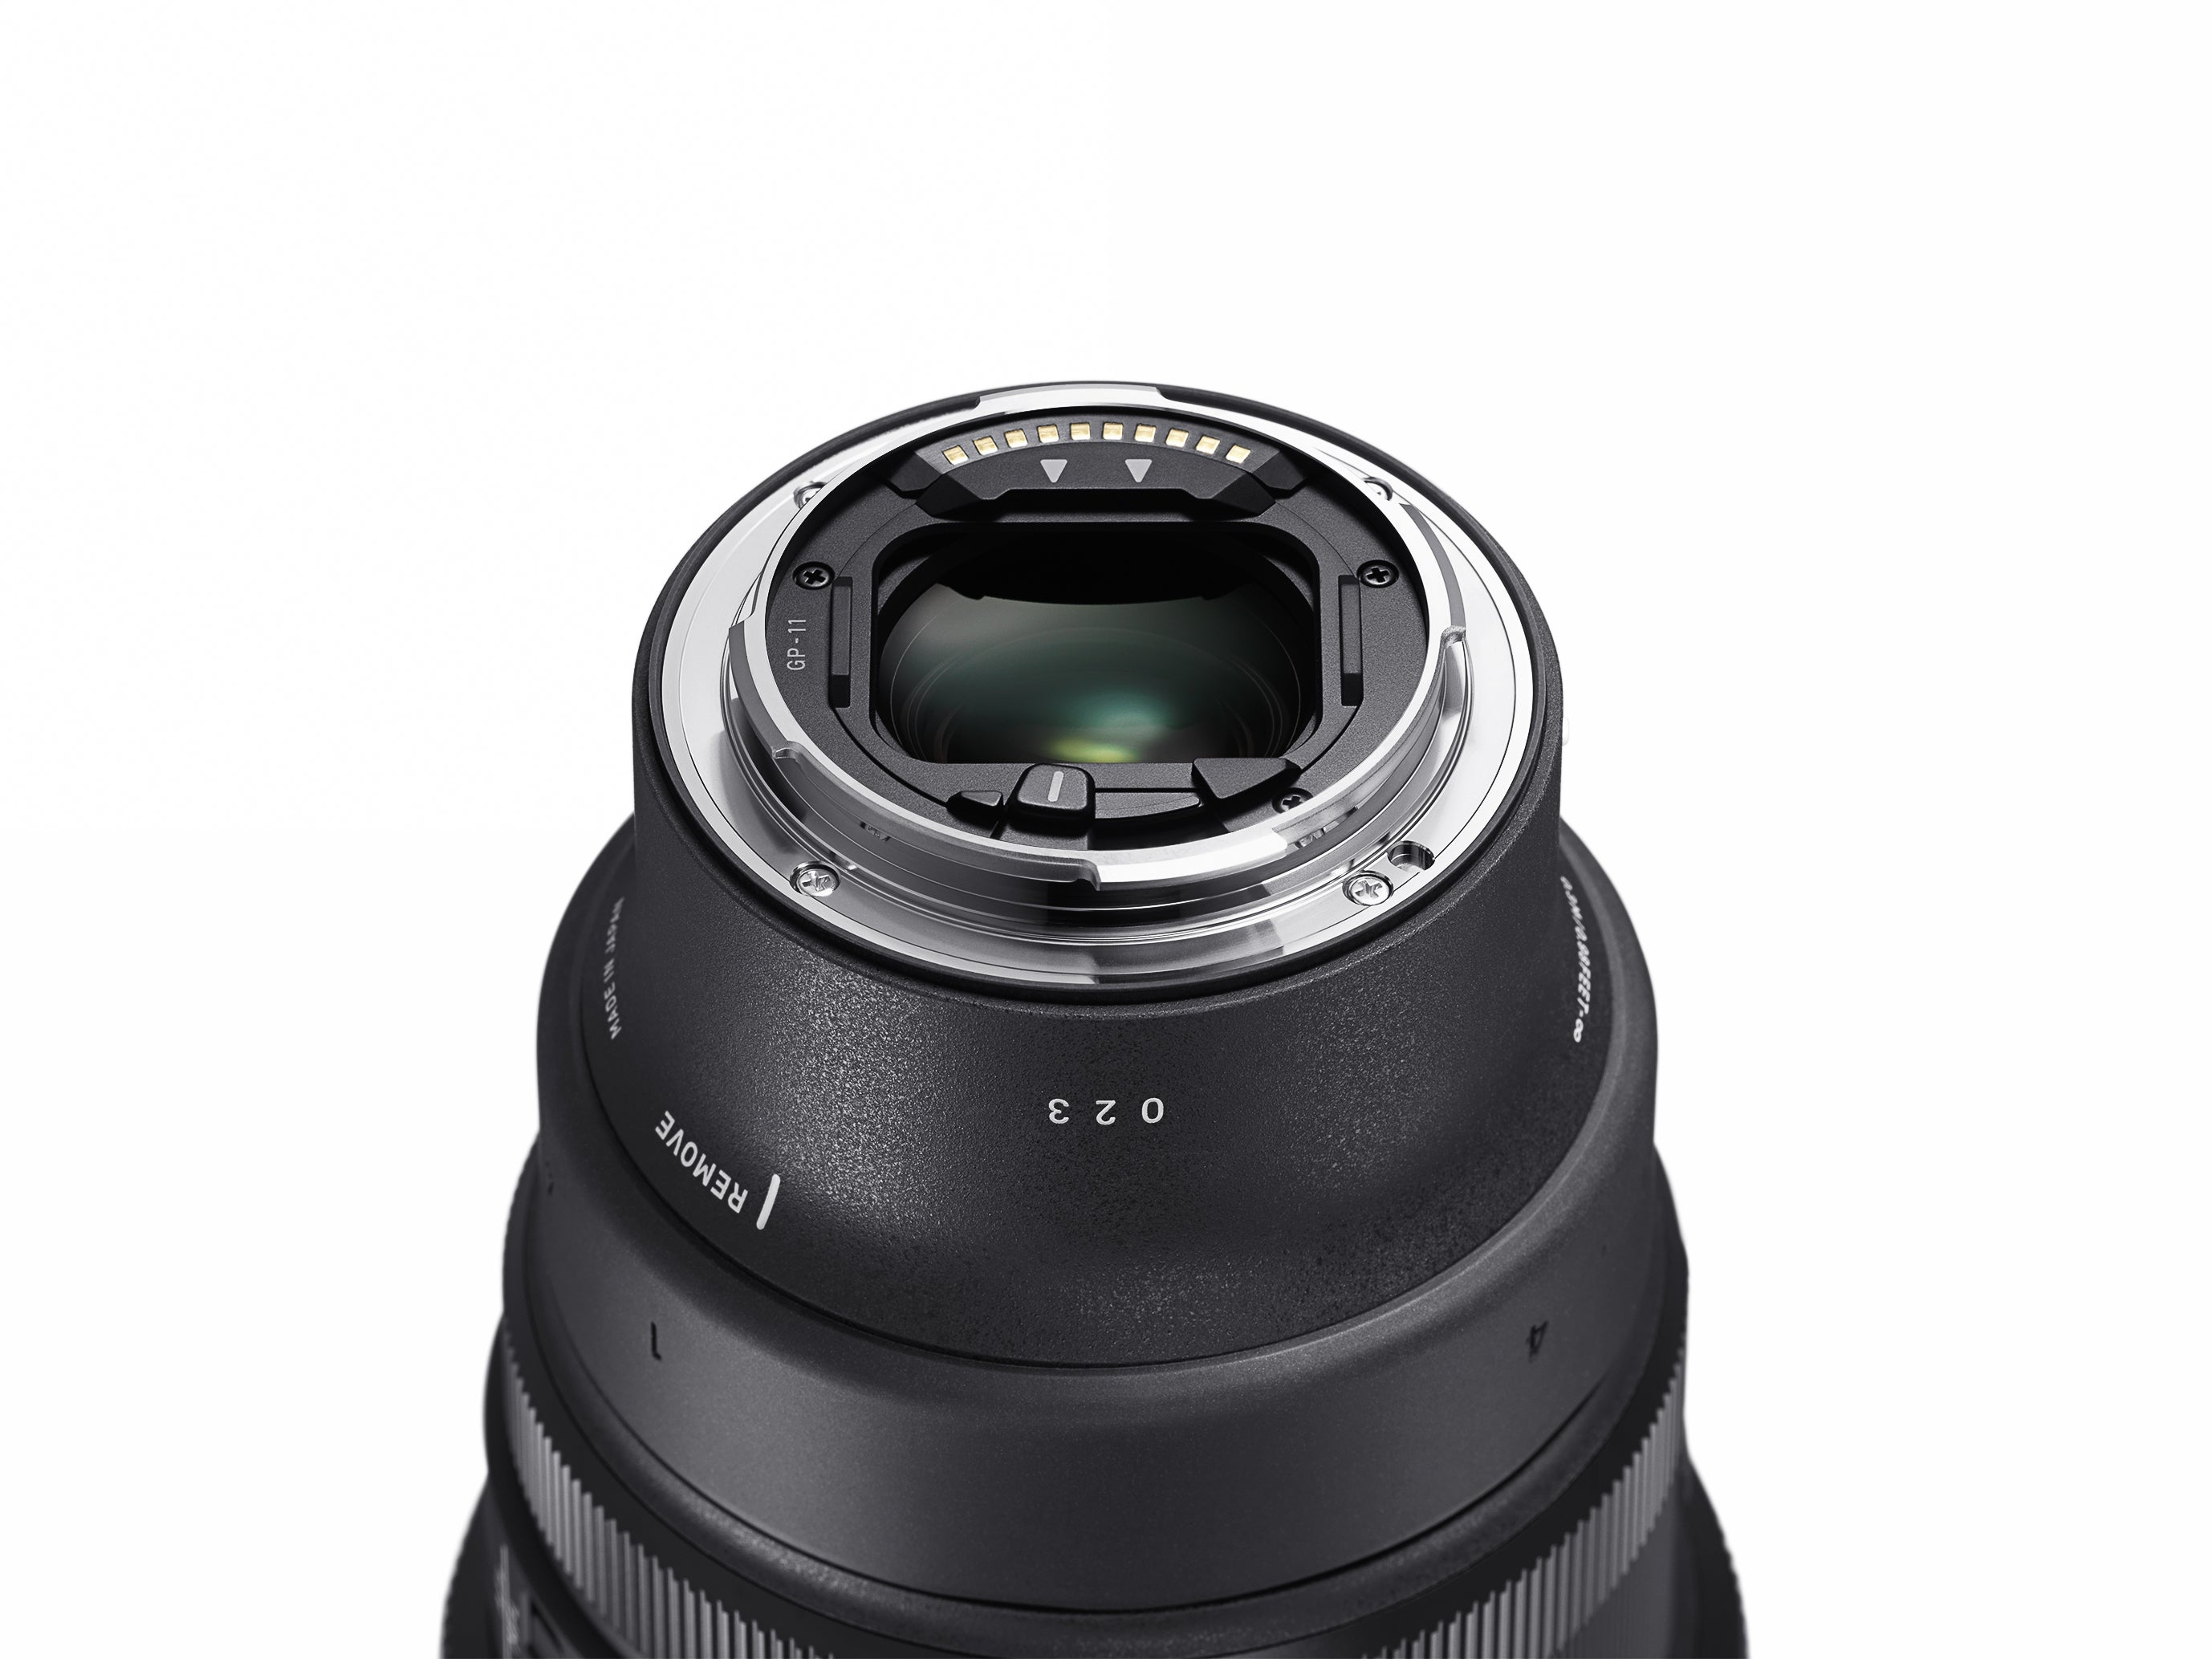 Sigma 14mm f1.4 DG DN Lens - L Mount